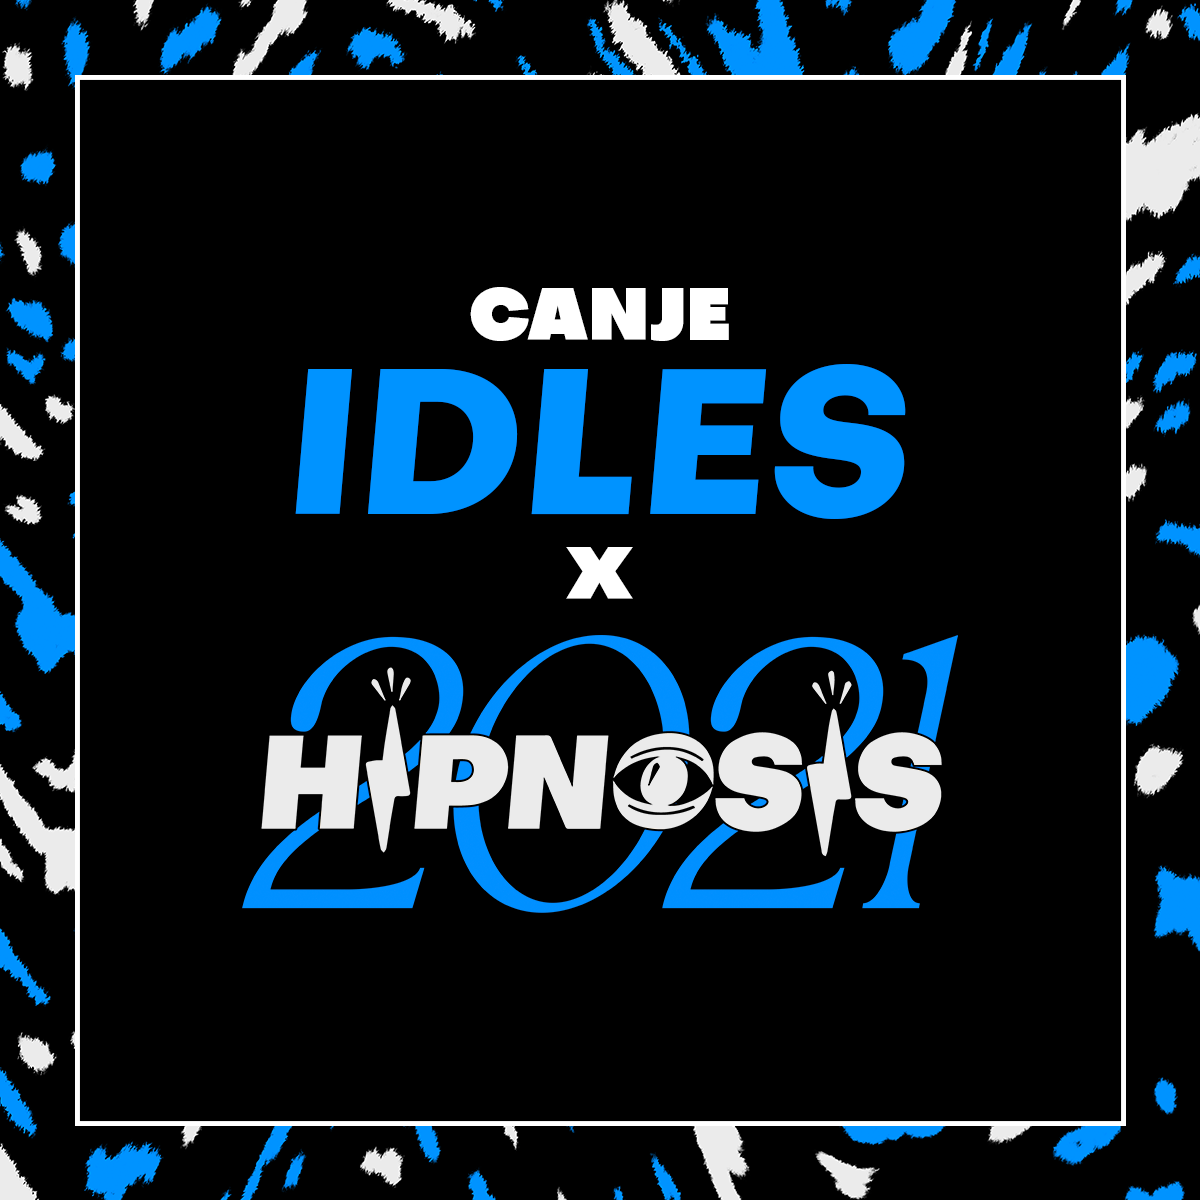 CANJE-IDLES-1 (2)